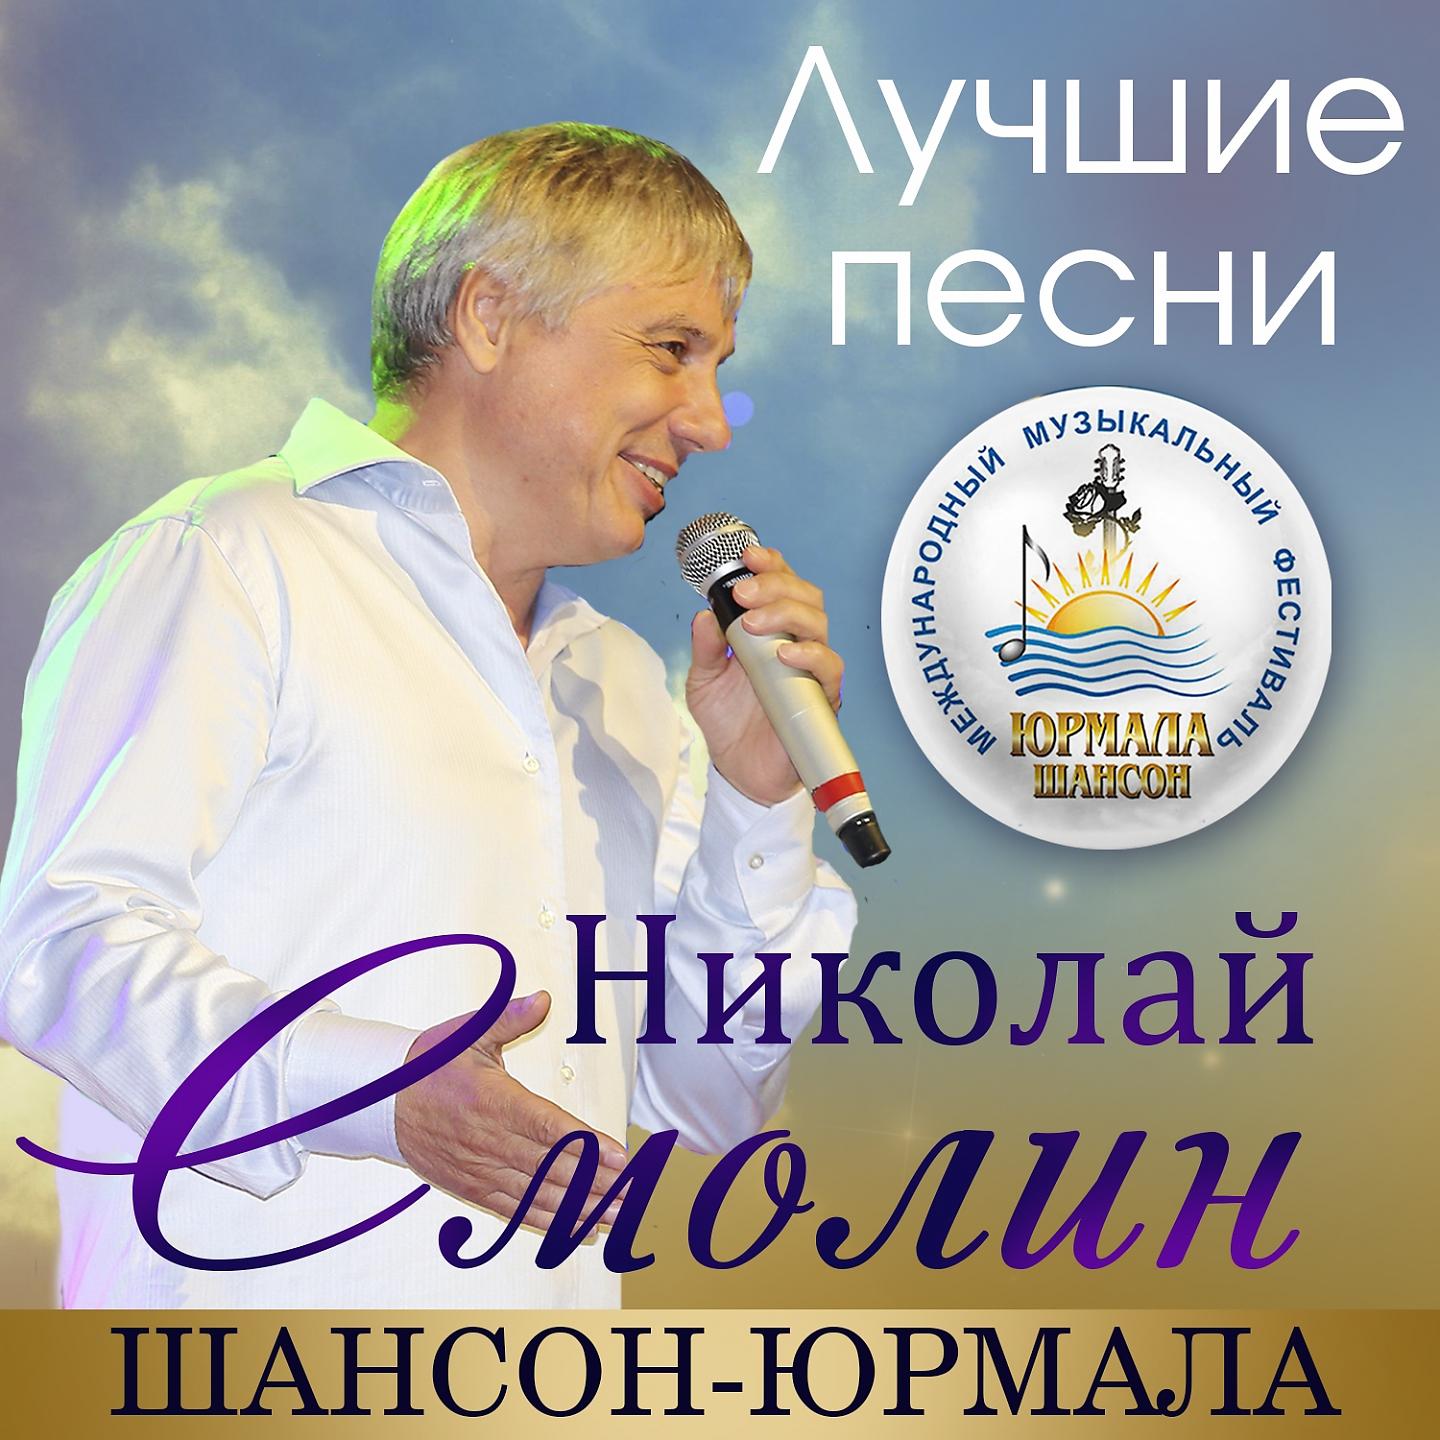 Николай Смолин - Колокола (Live)